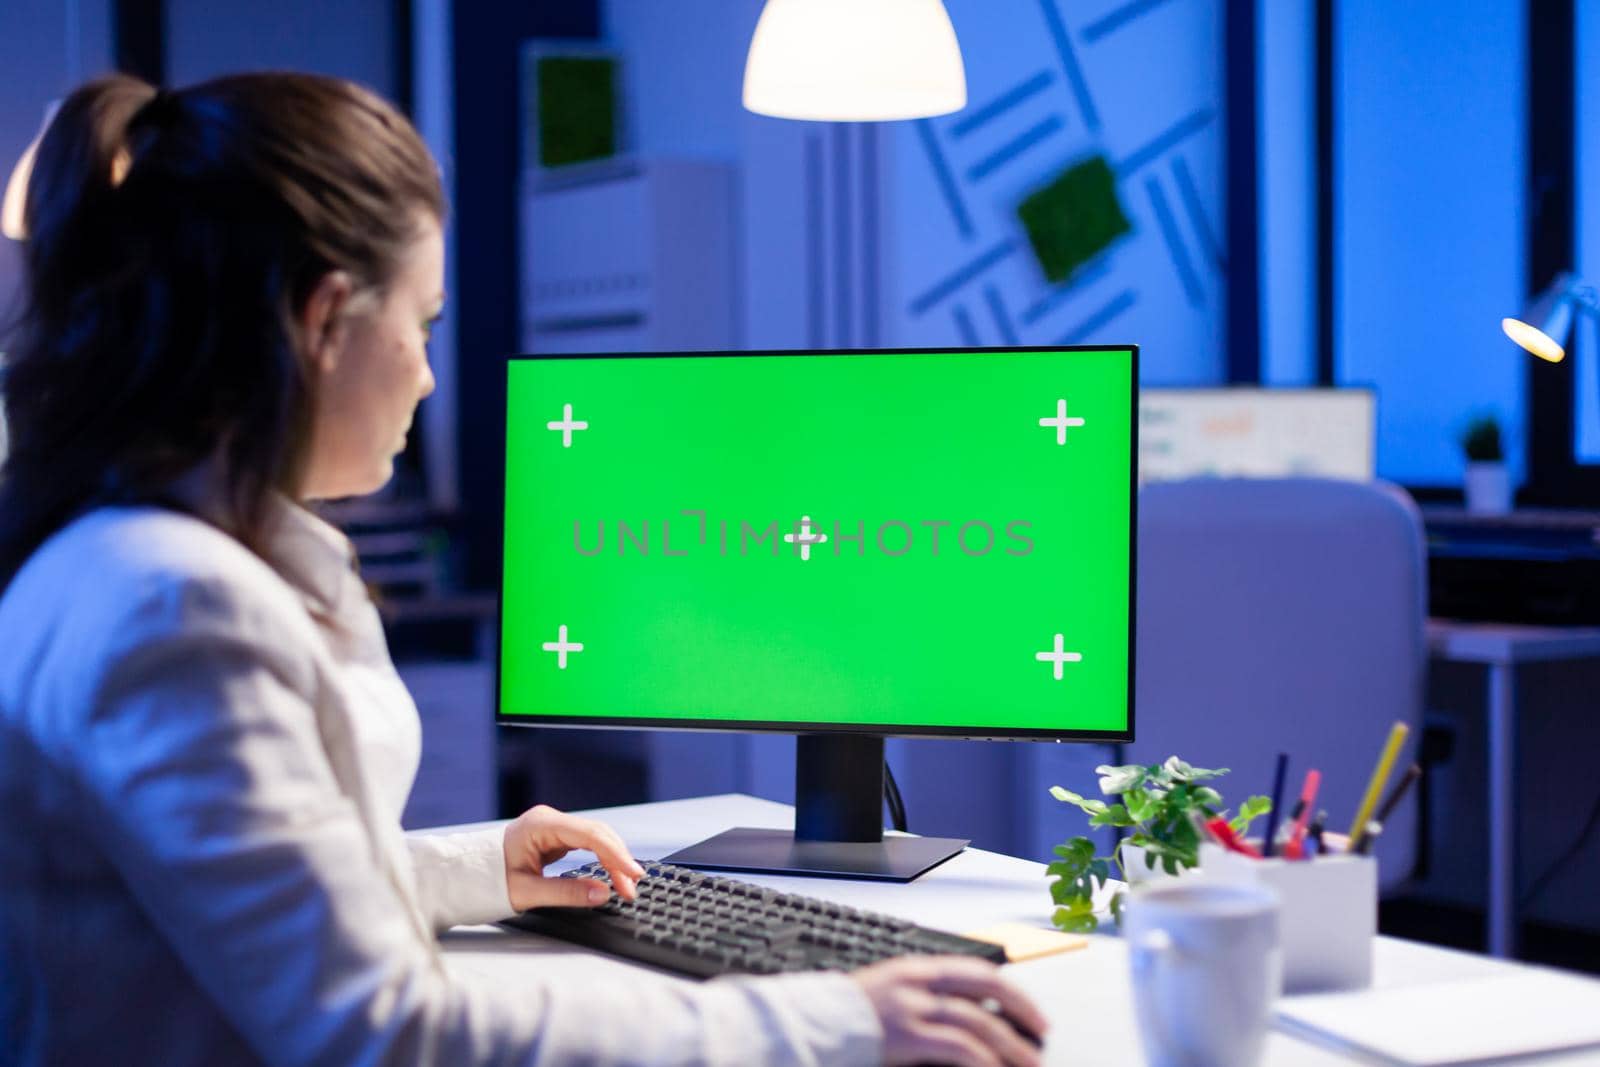 Entrepreneur working in front of green screen display by DCStudio